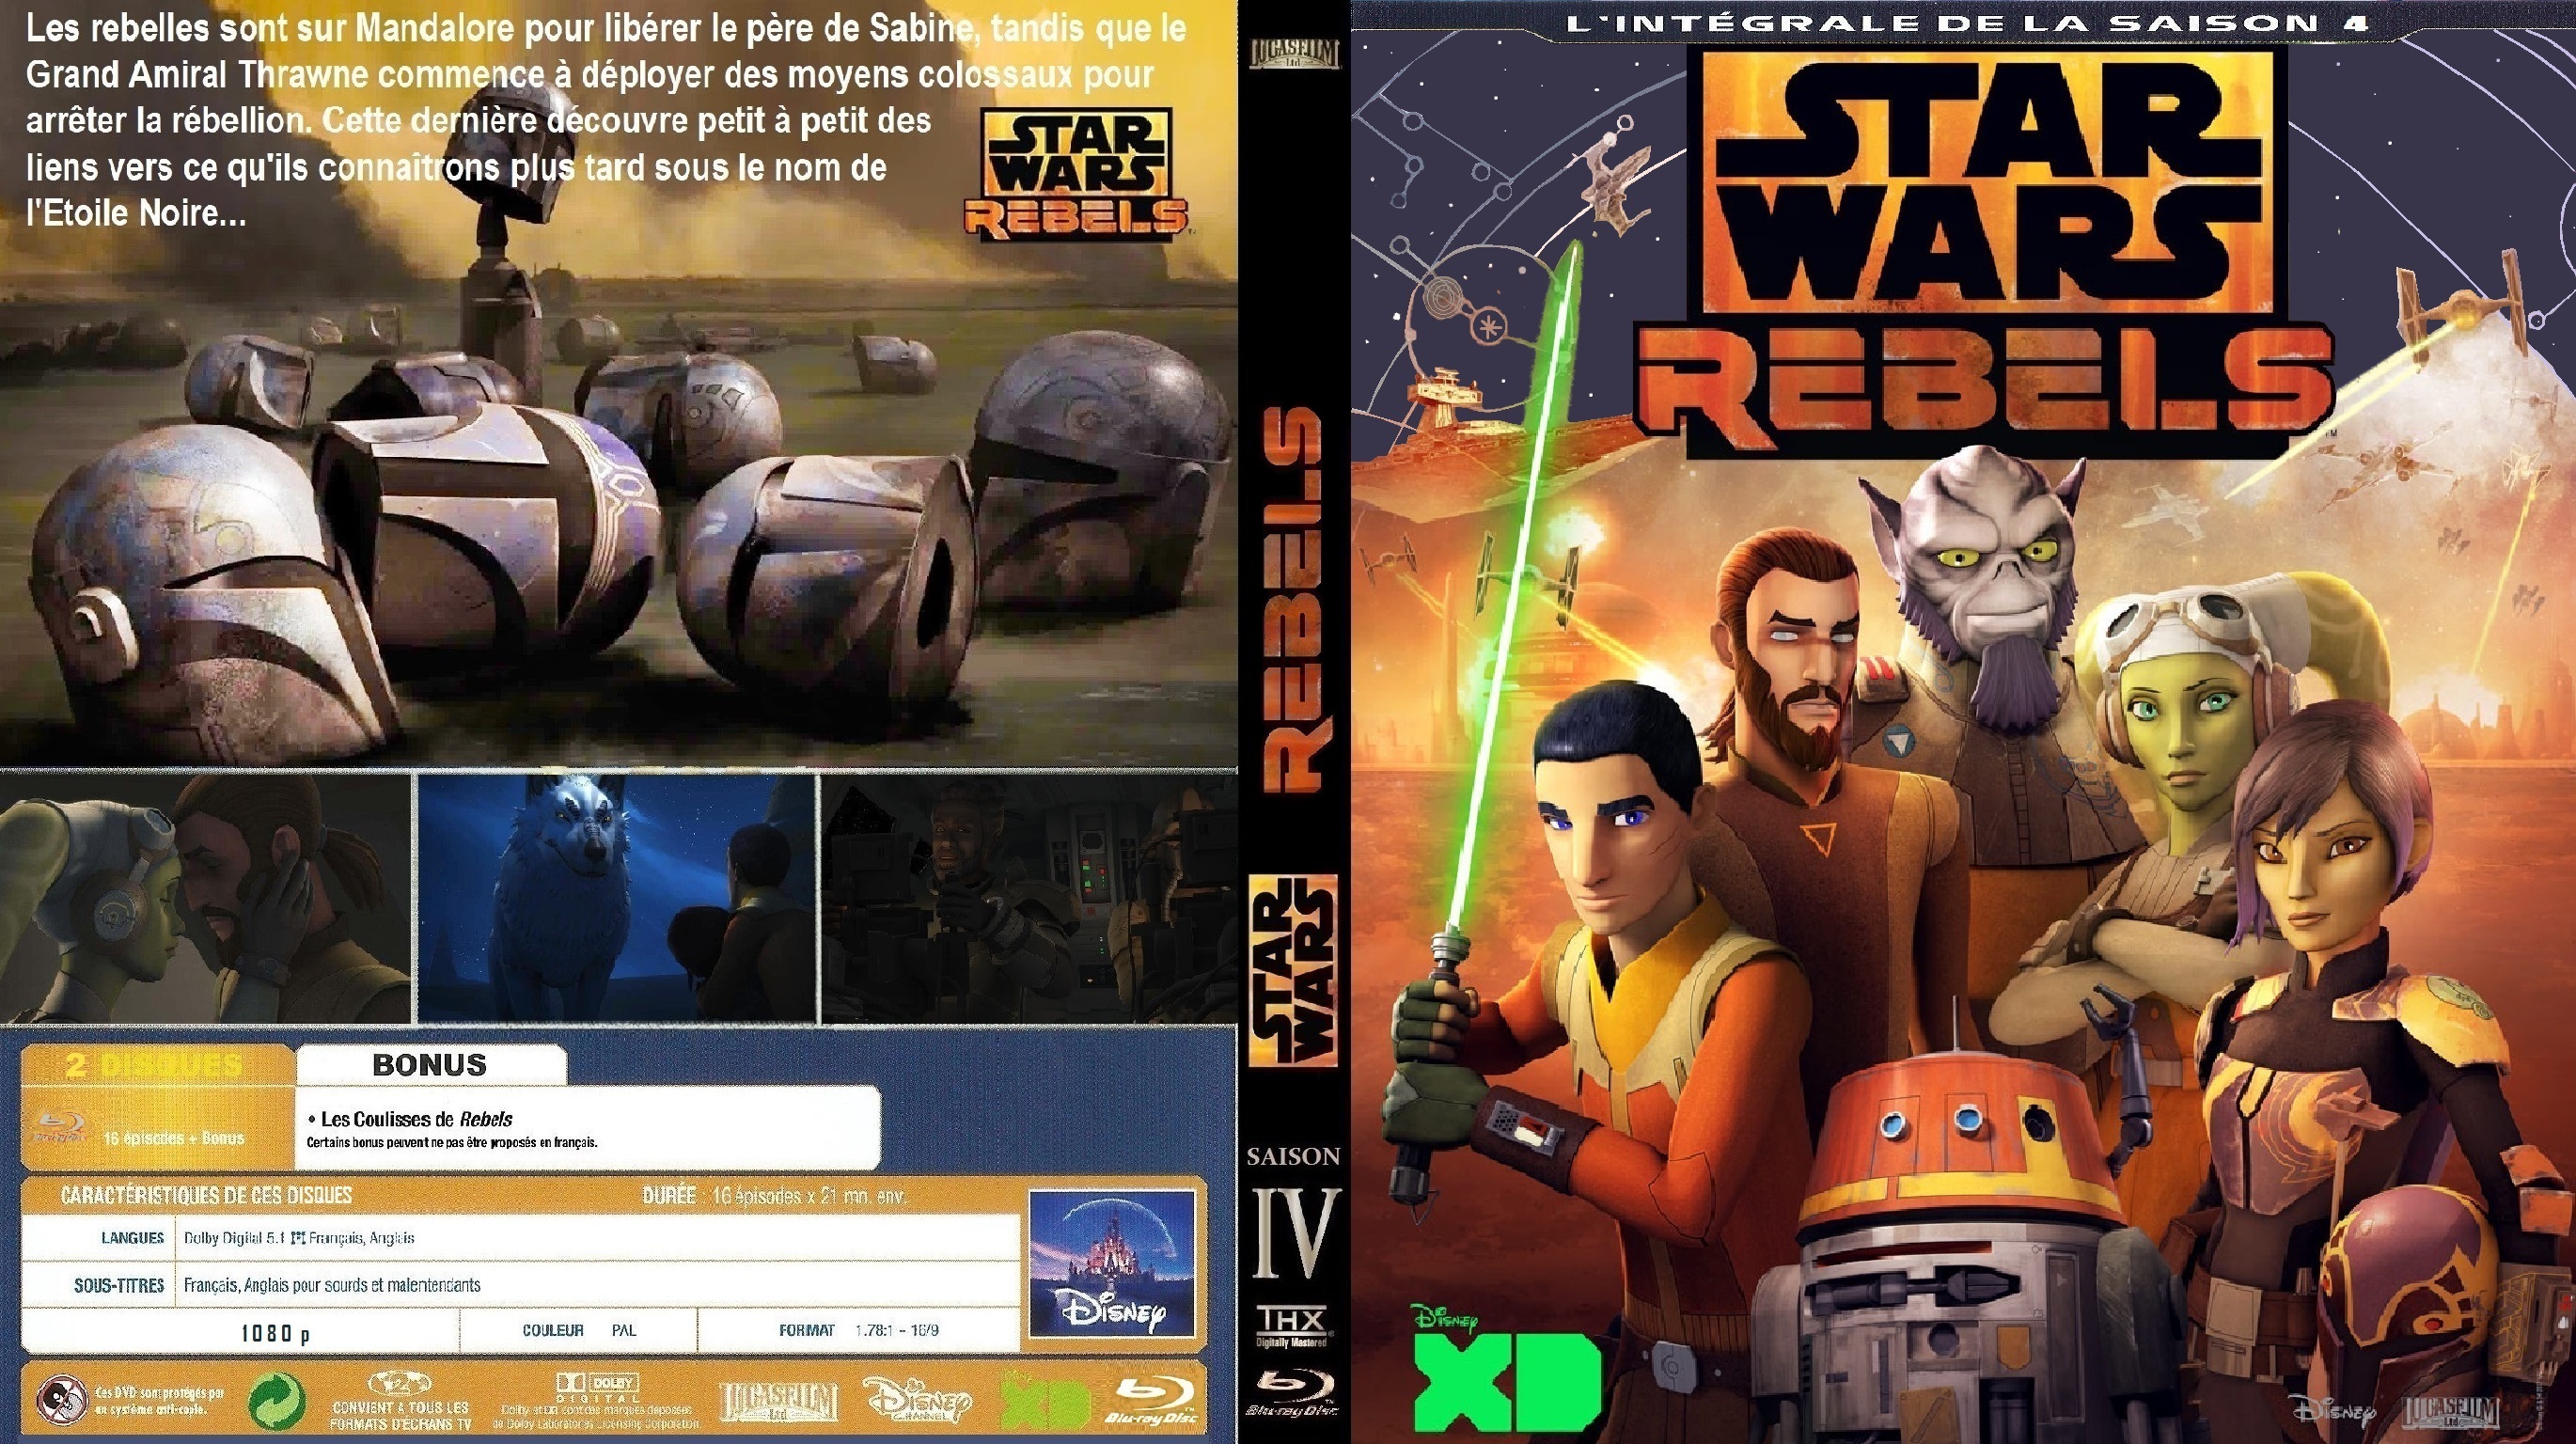 Jaquette DVD Star Wars Rebels saison 4 custom (BLU-RAY)